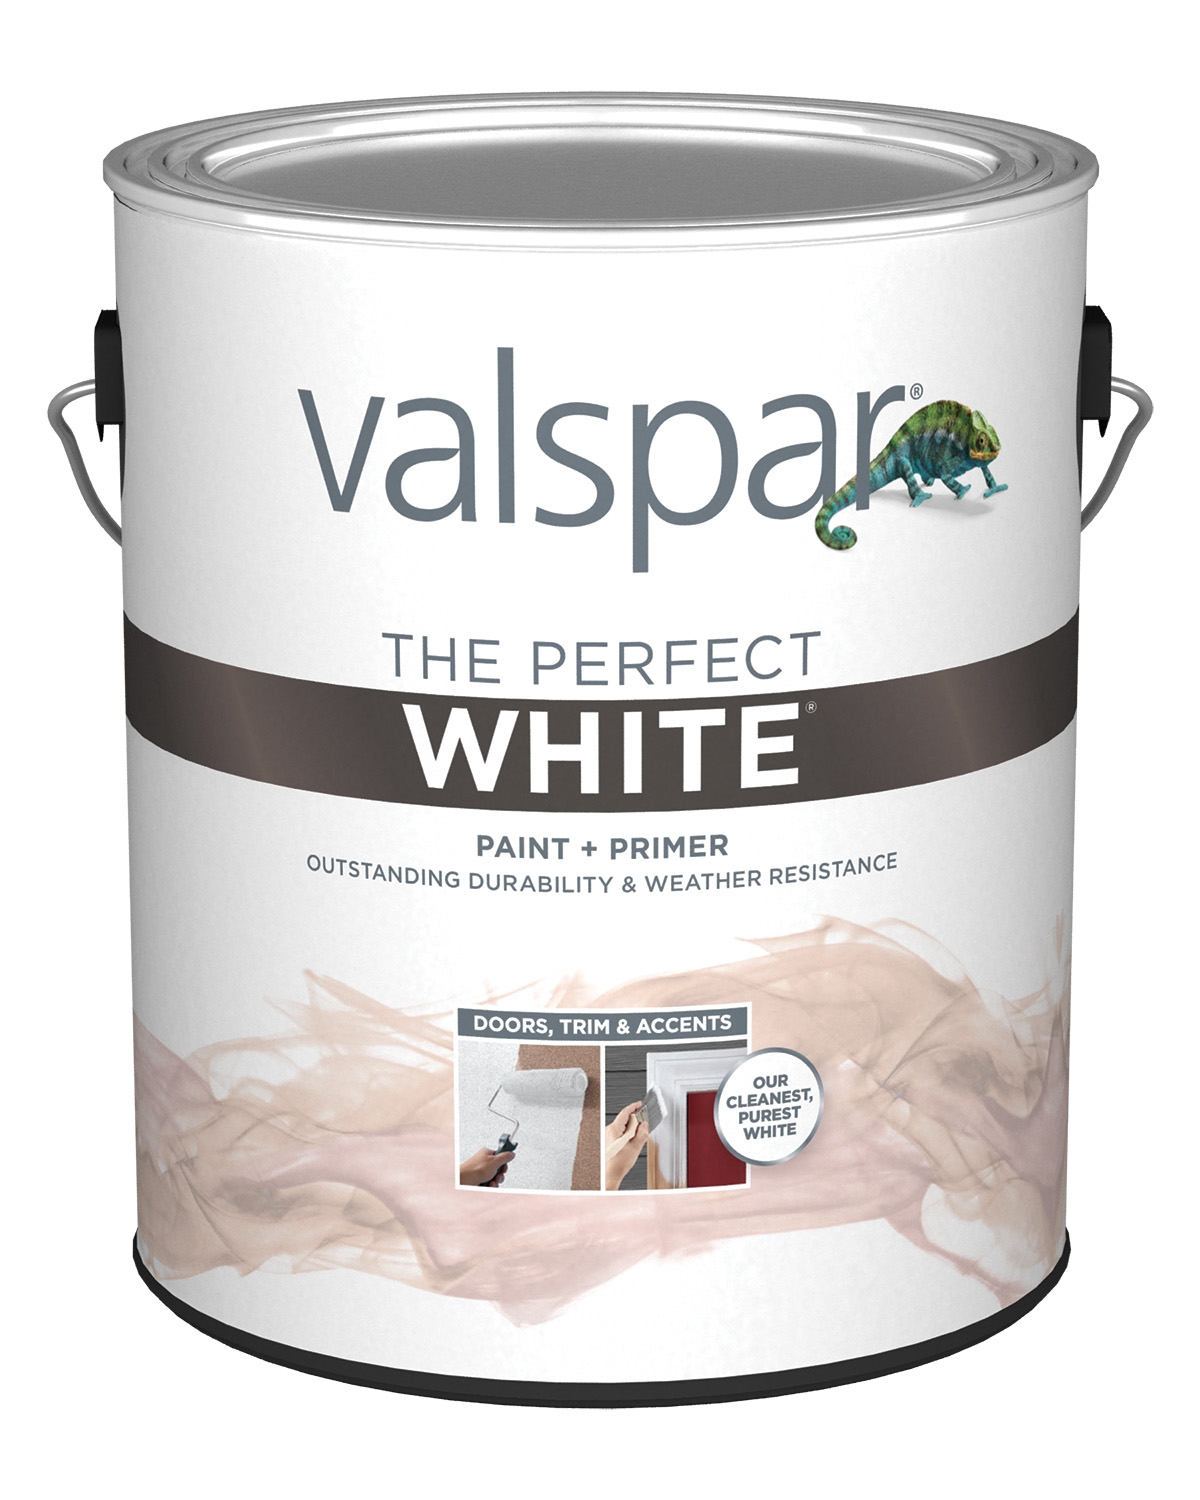 Valspar® Interior Paint and Exterior Paint Products